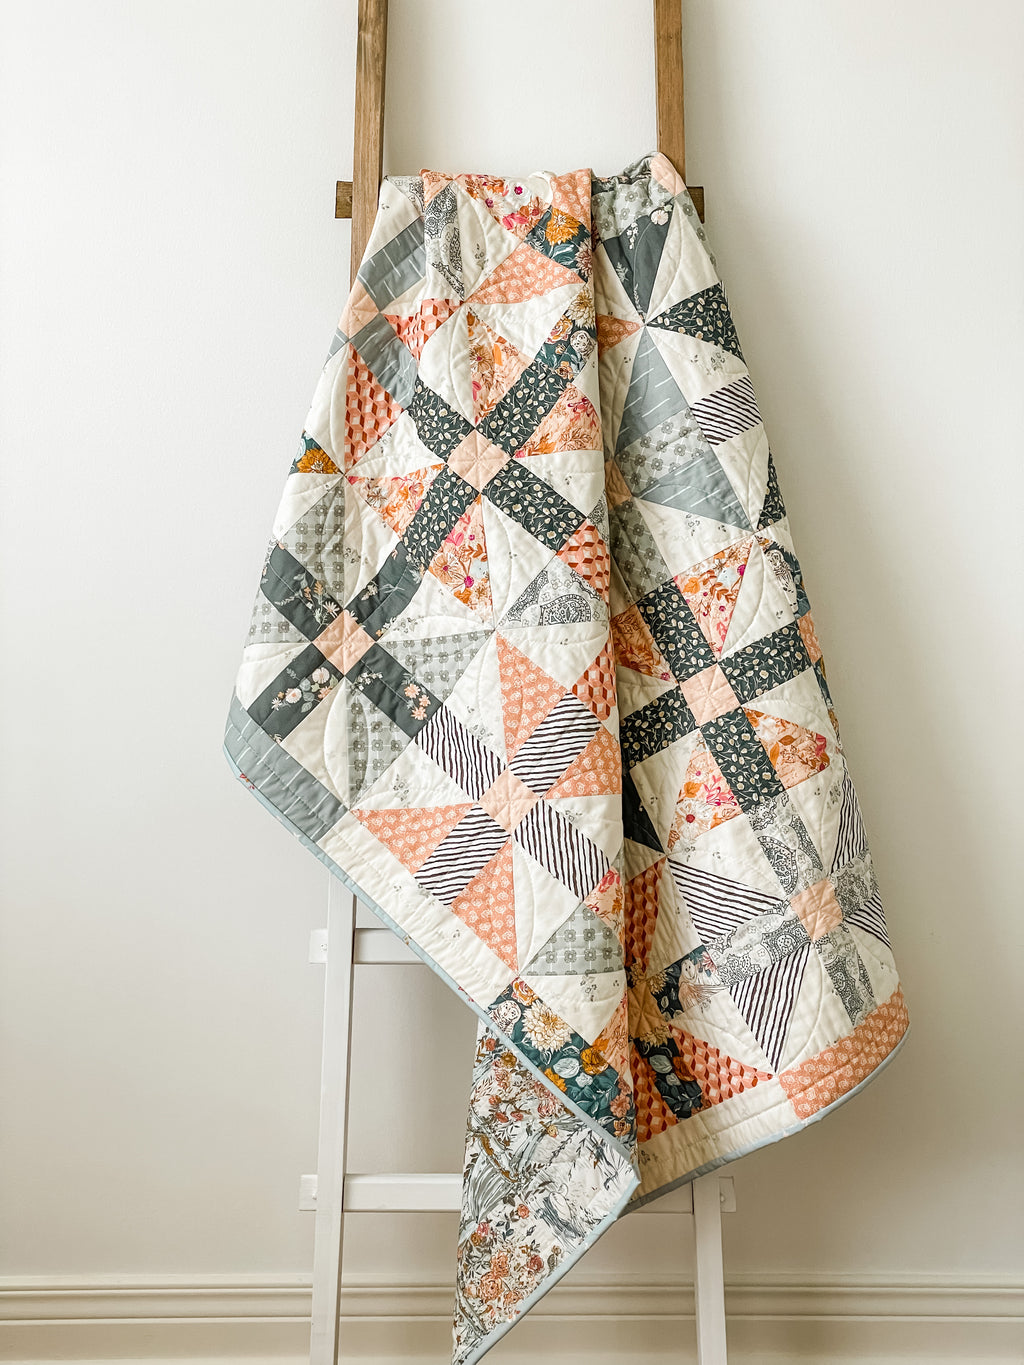 Lana Lemur by Elizabeth Hartman with Adventure Fabrics Quilt Kit